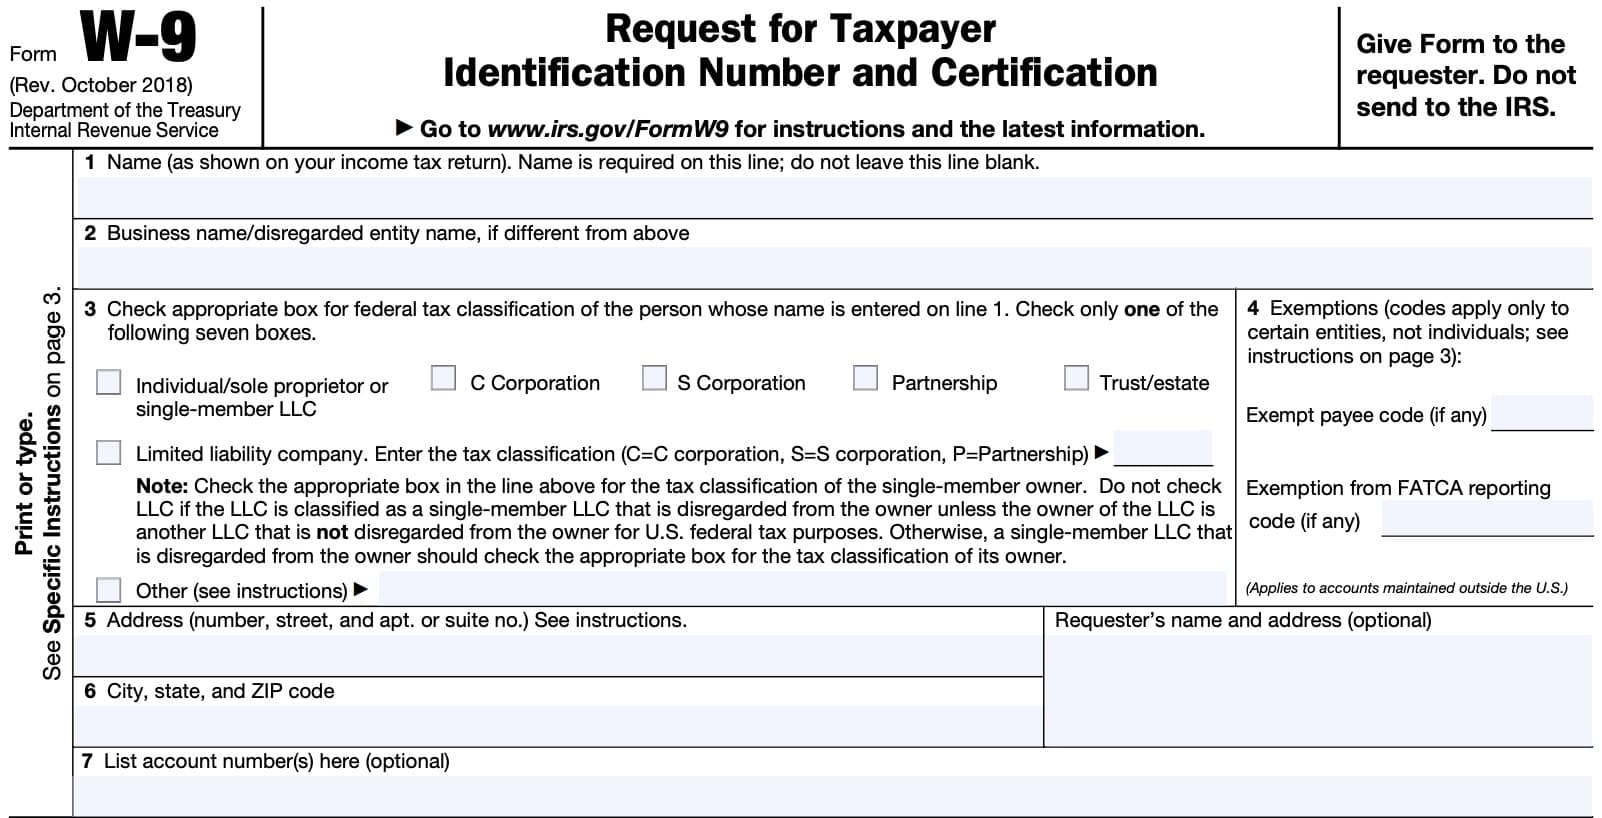 irs form w-9 taxpayer information